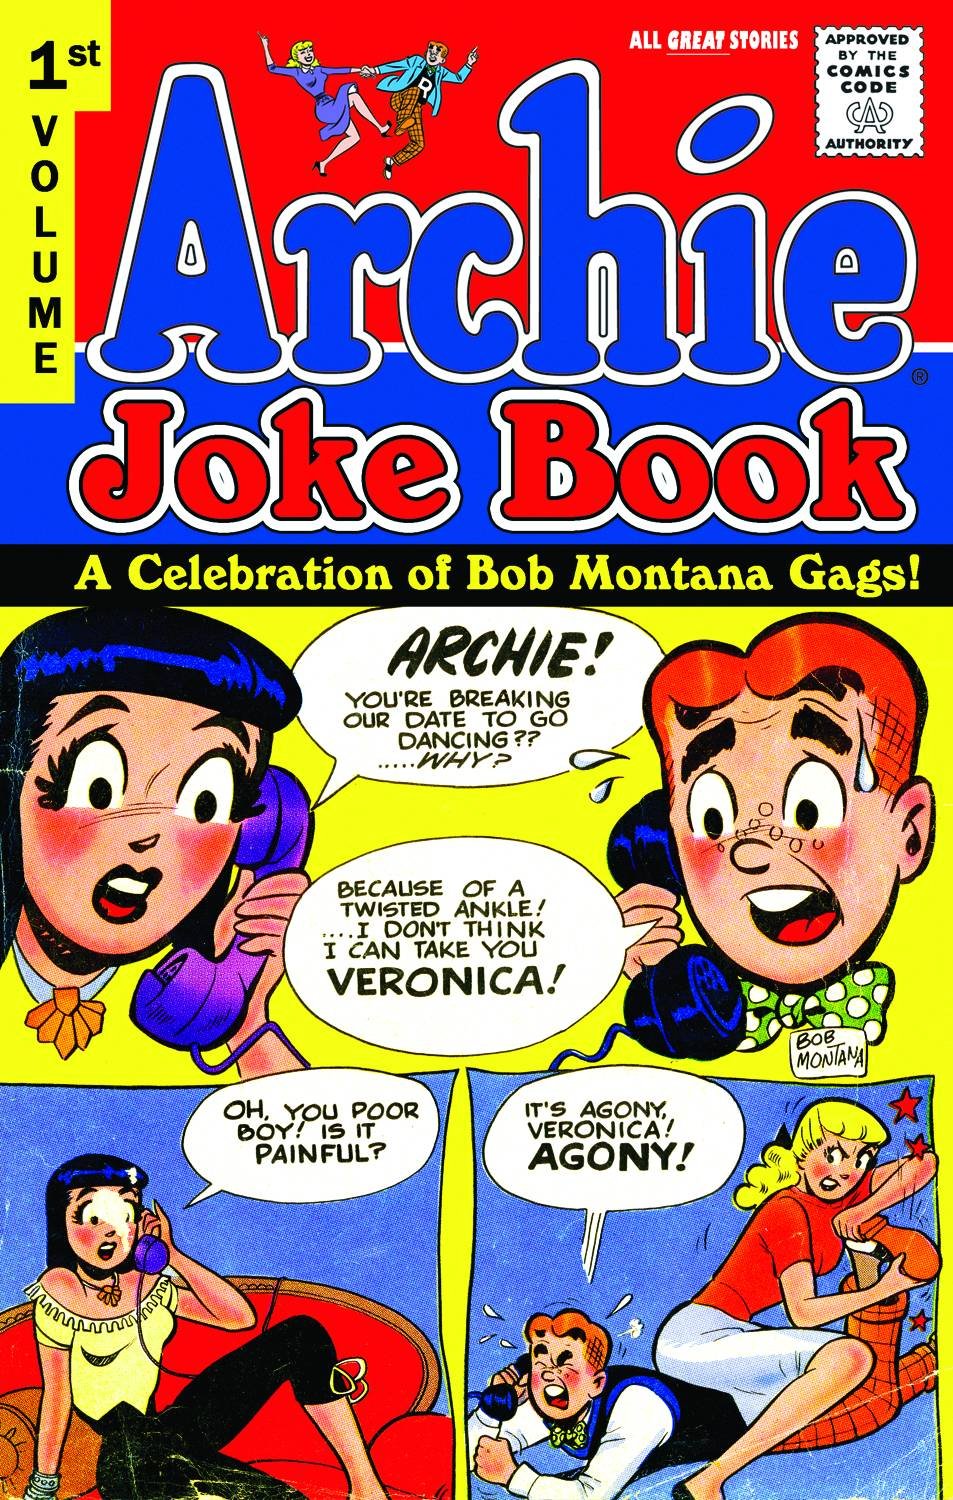 High Resolution Wallpaper | Archie's Joke Book 953x1500 px